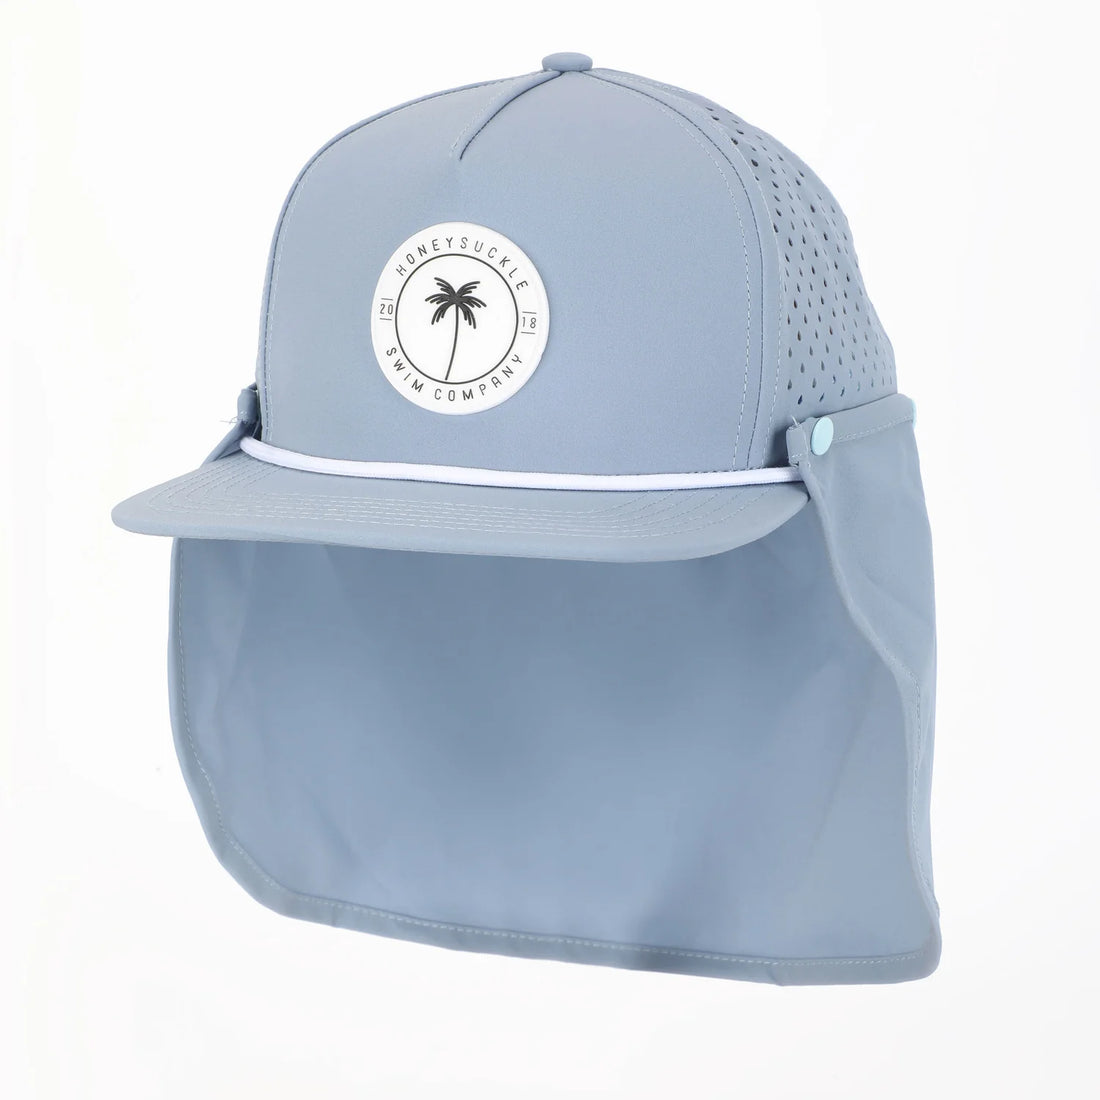 Honeysuckle Swim Co - Snapback Hat (Light Blue)